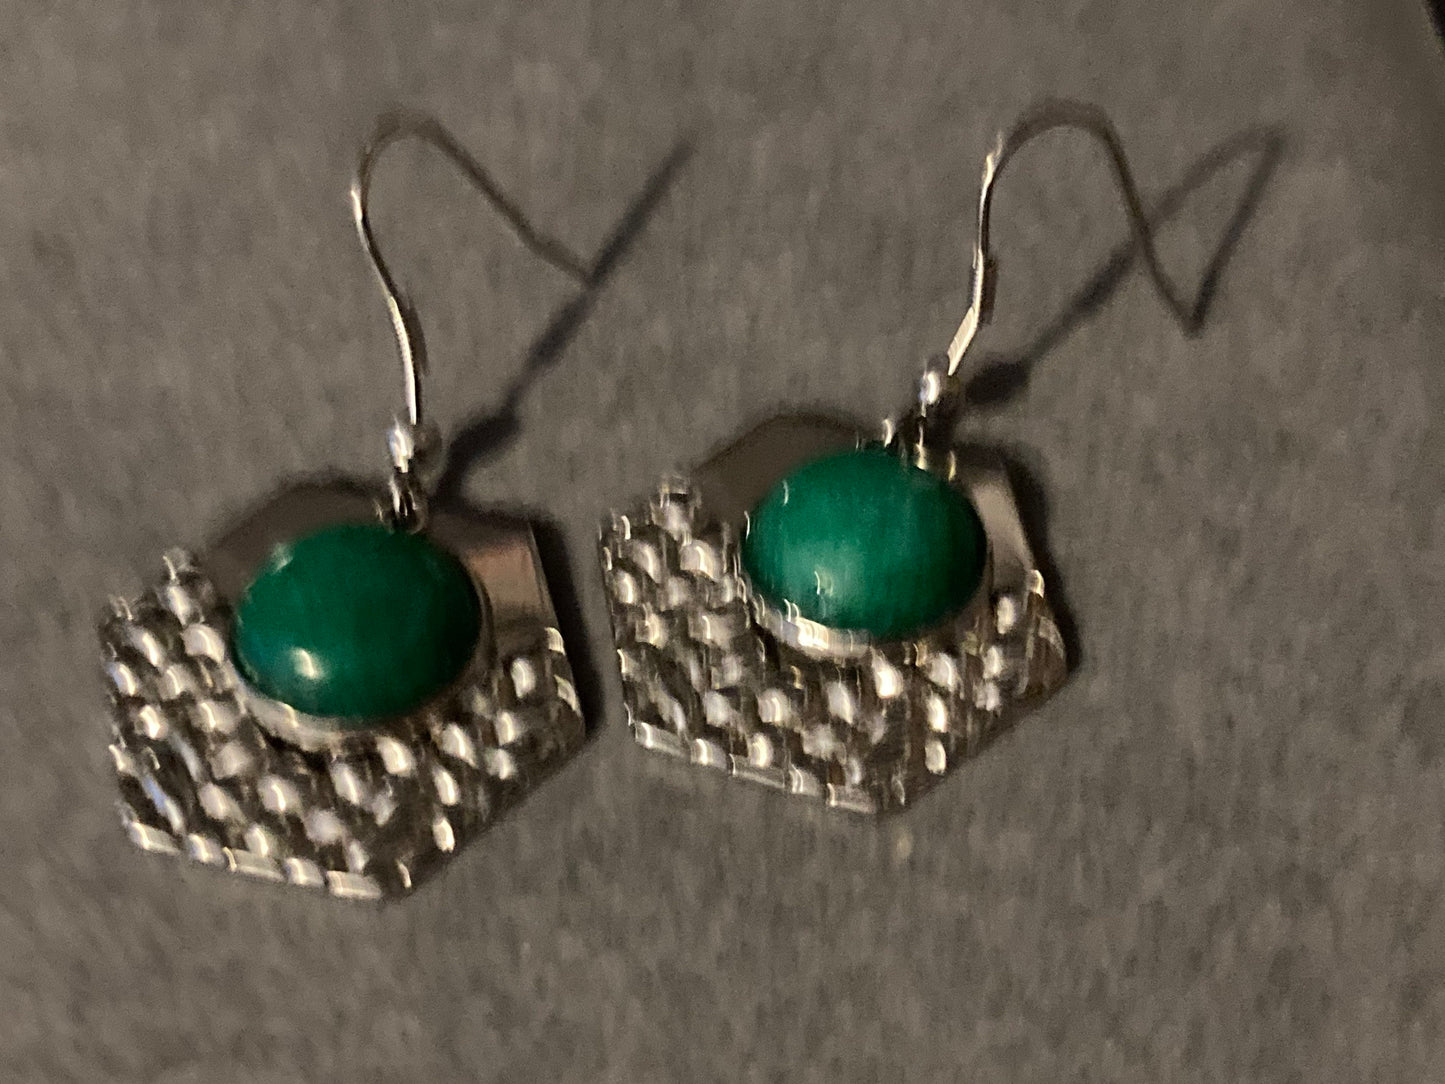 Green gemstone dangly earrings stainless steel planished metal hexagons